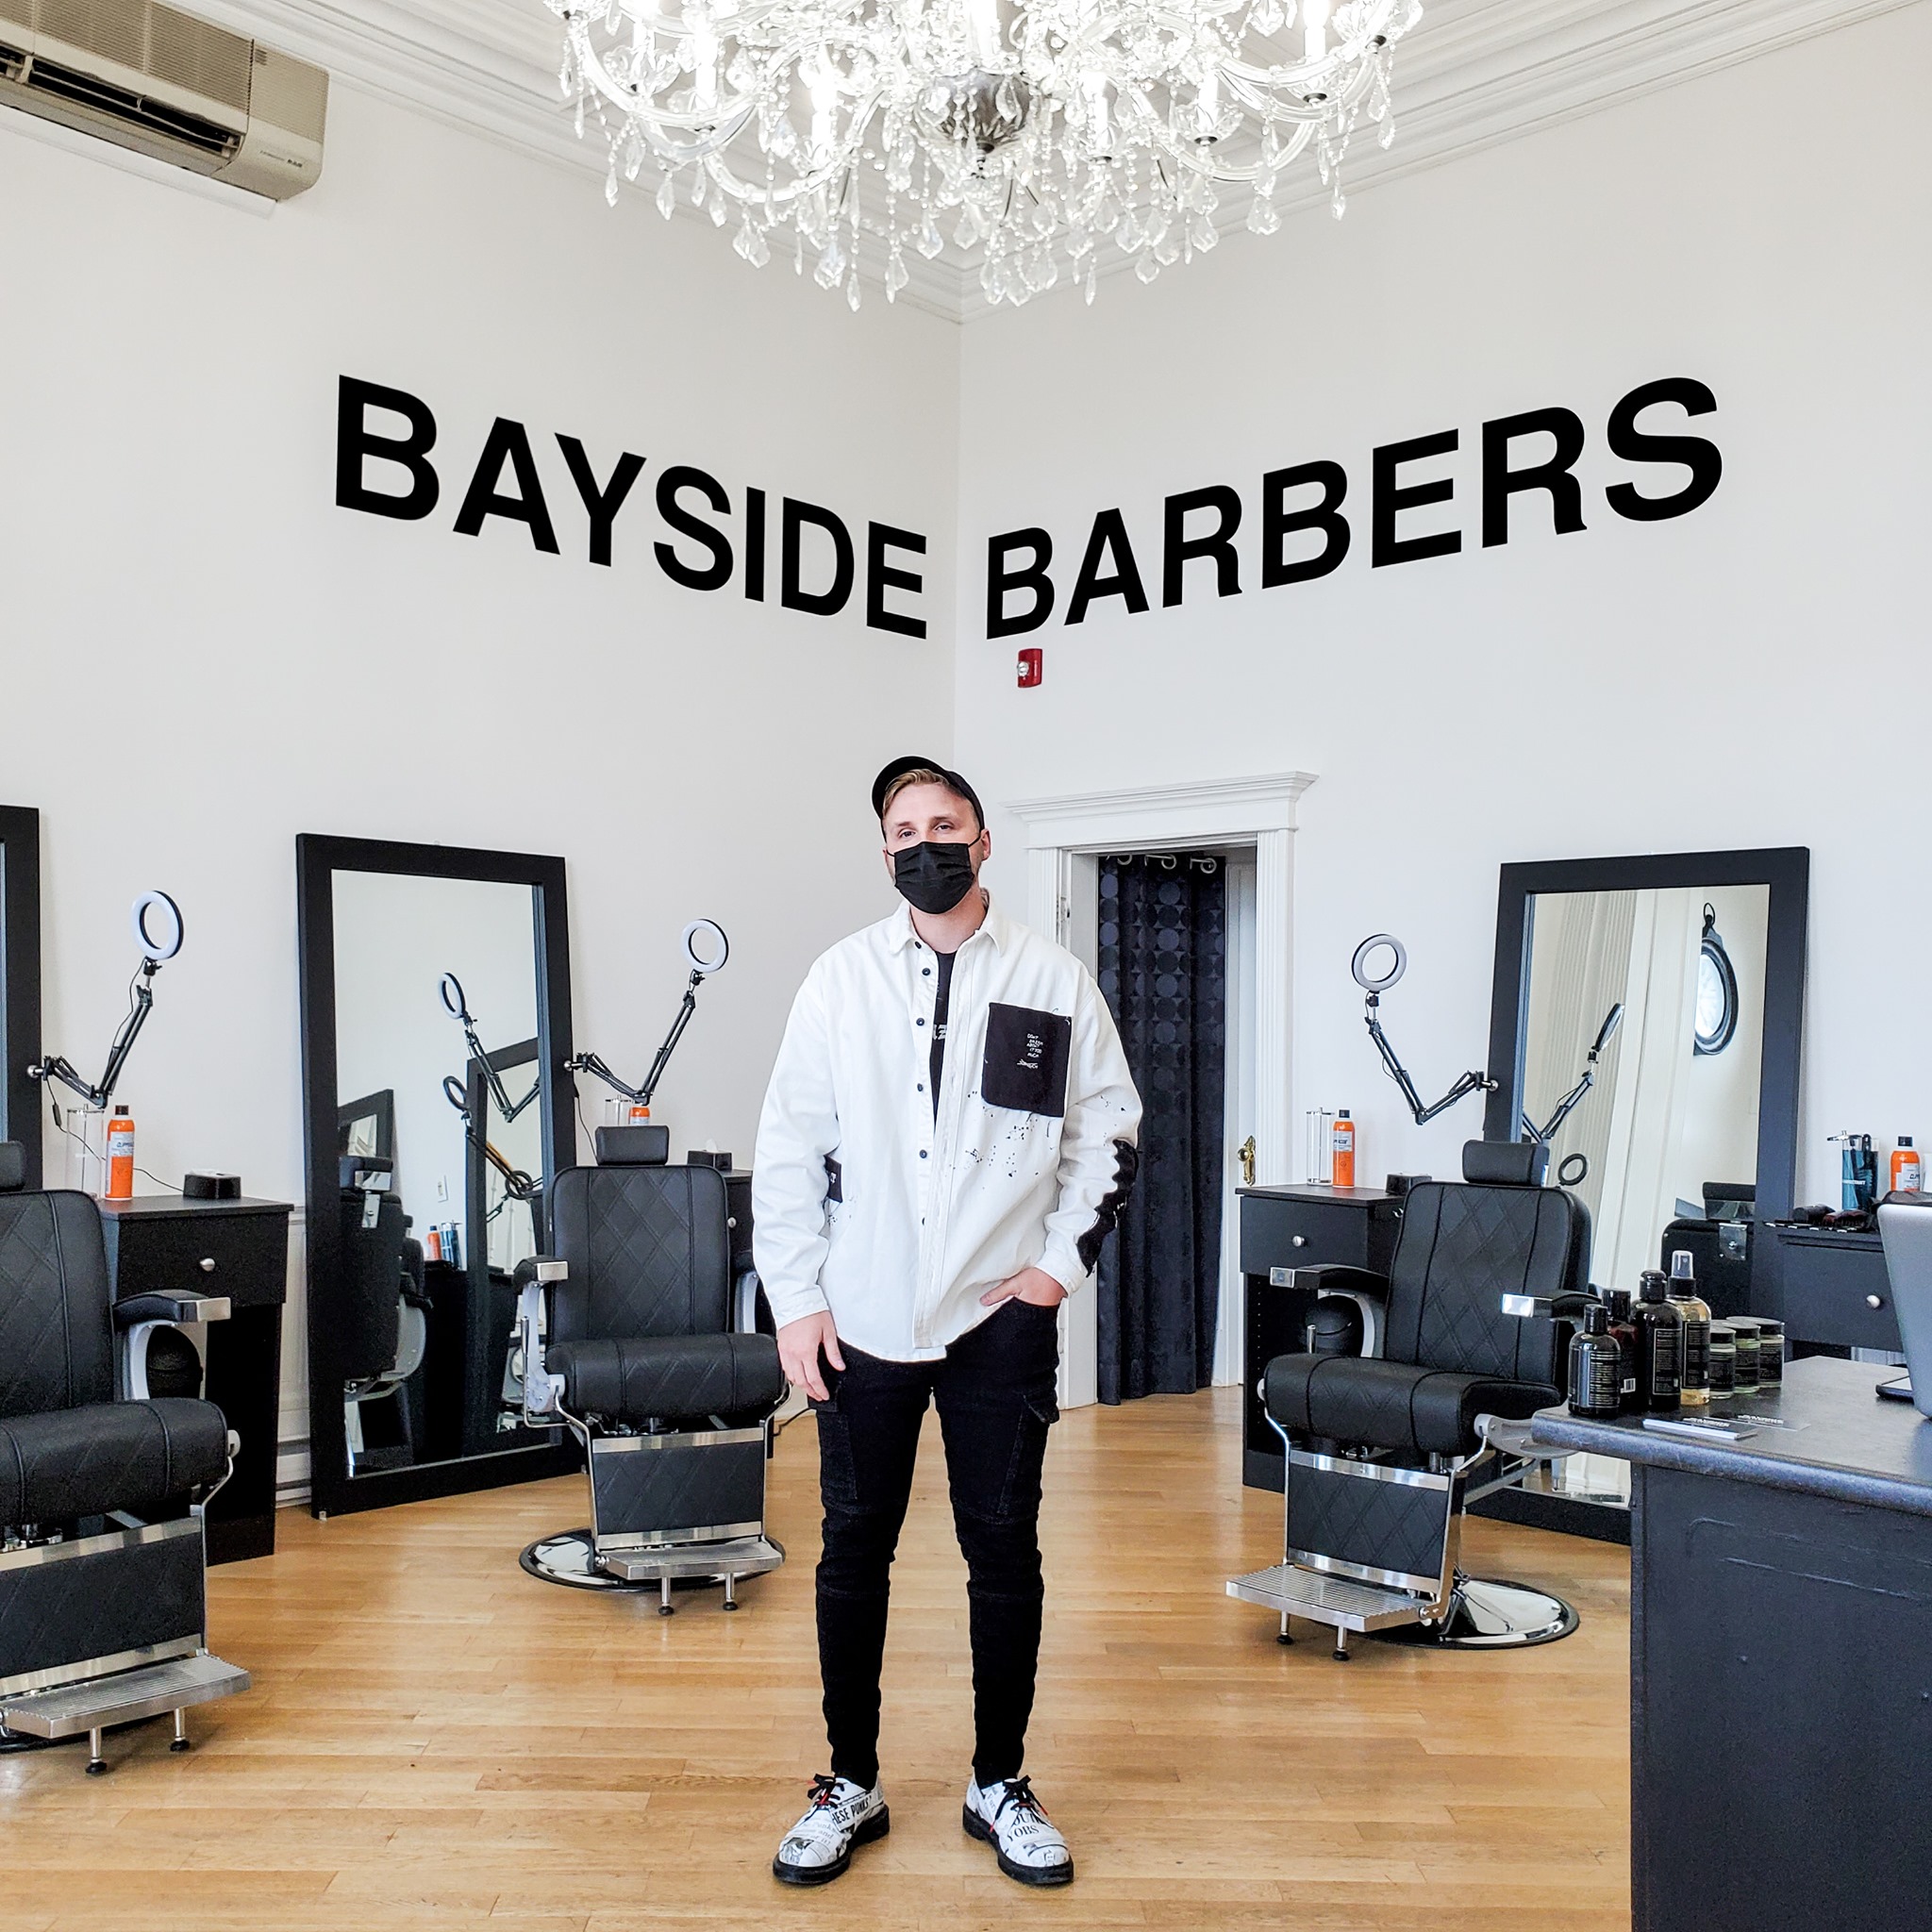 Bayside Barbers 1 